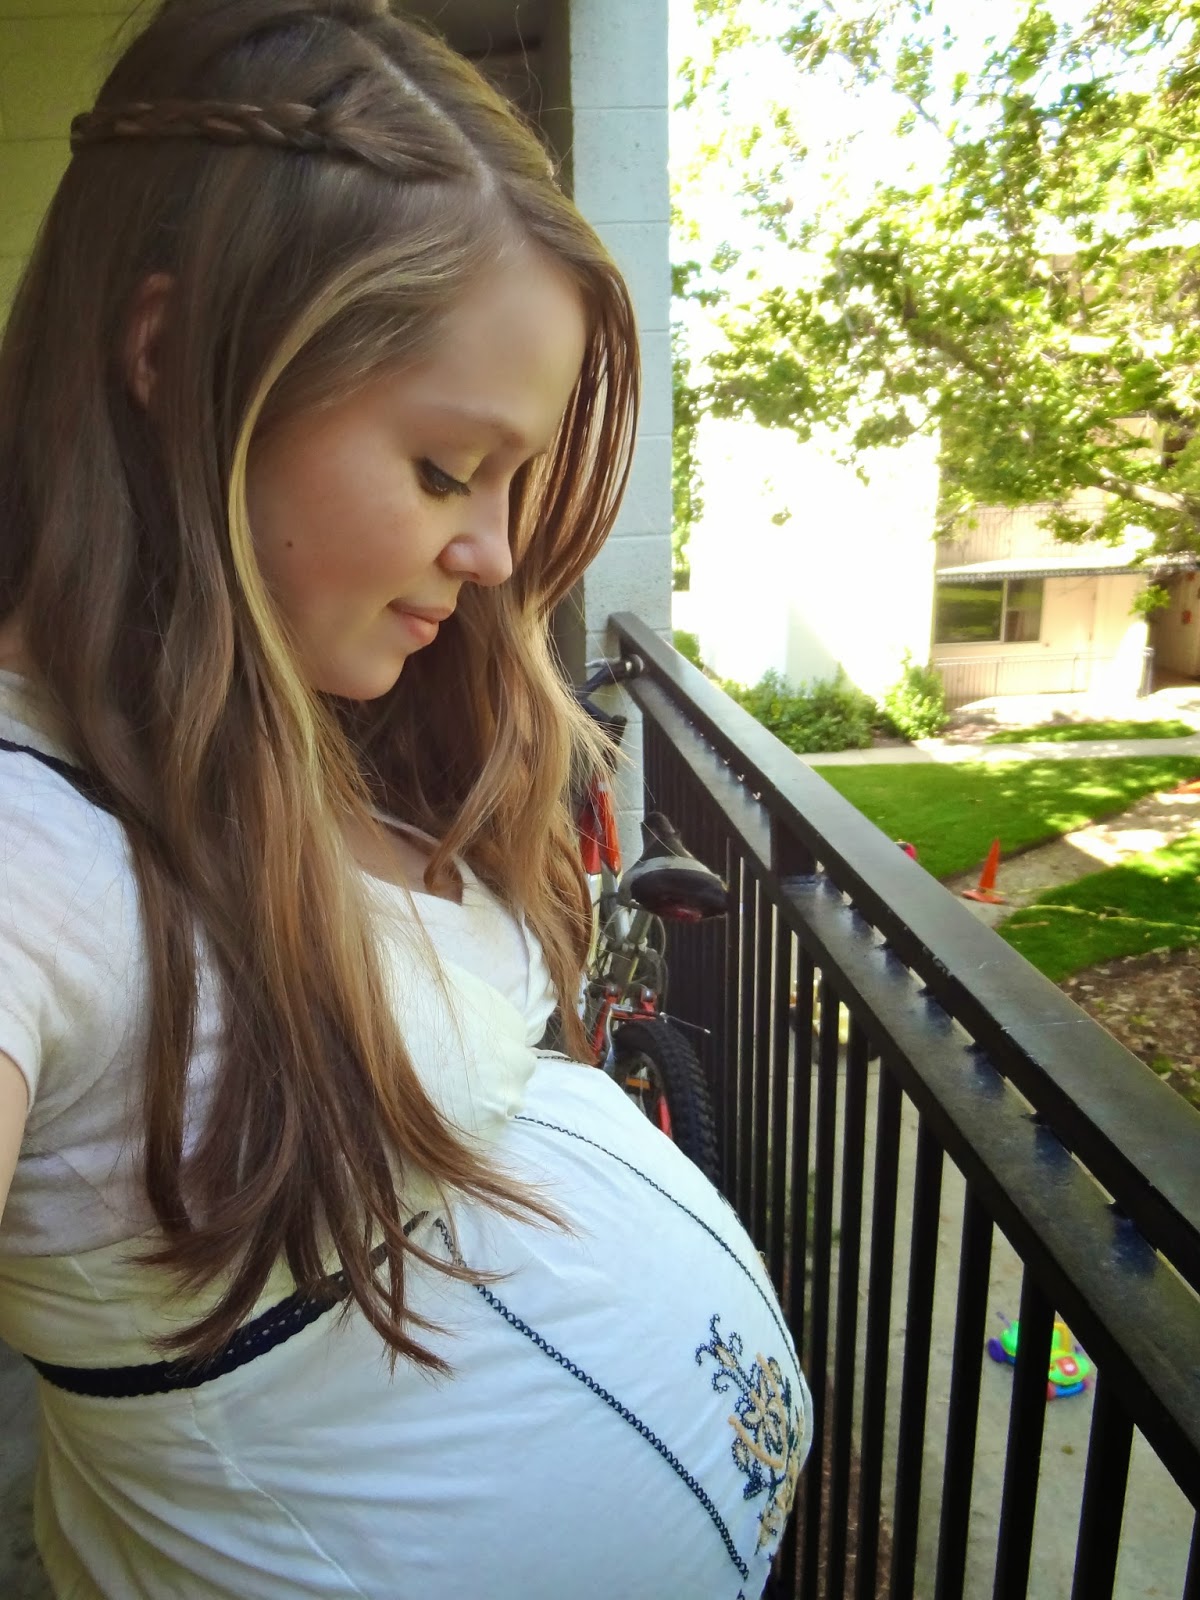 Pregnant teens giving birth